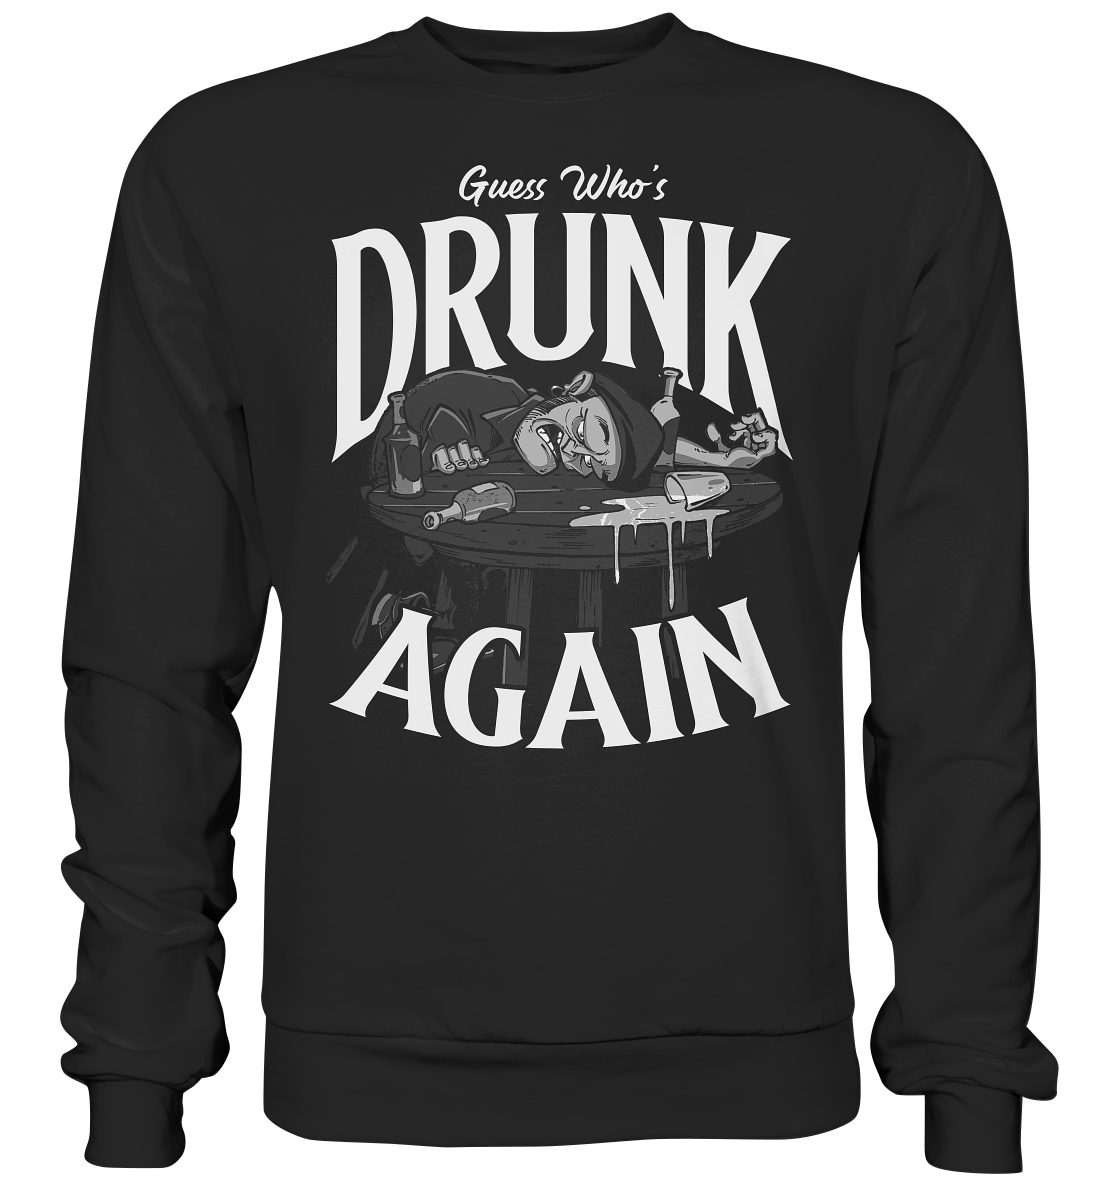 Guess Who's Drunk Again - Premium Sweatshirt